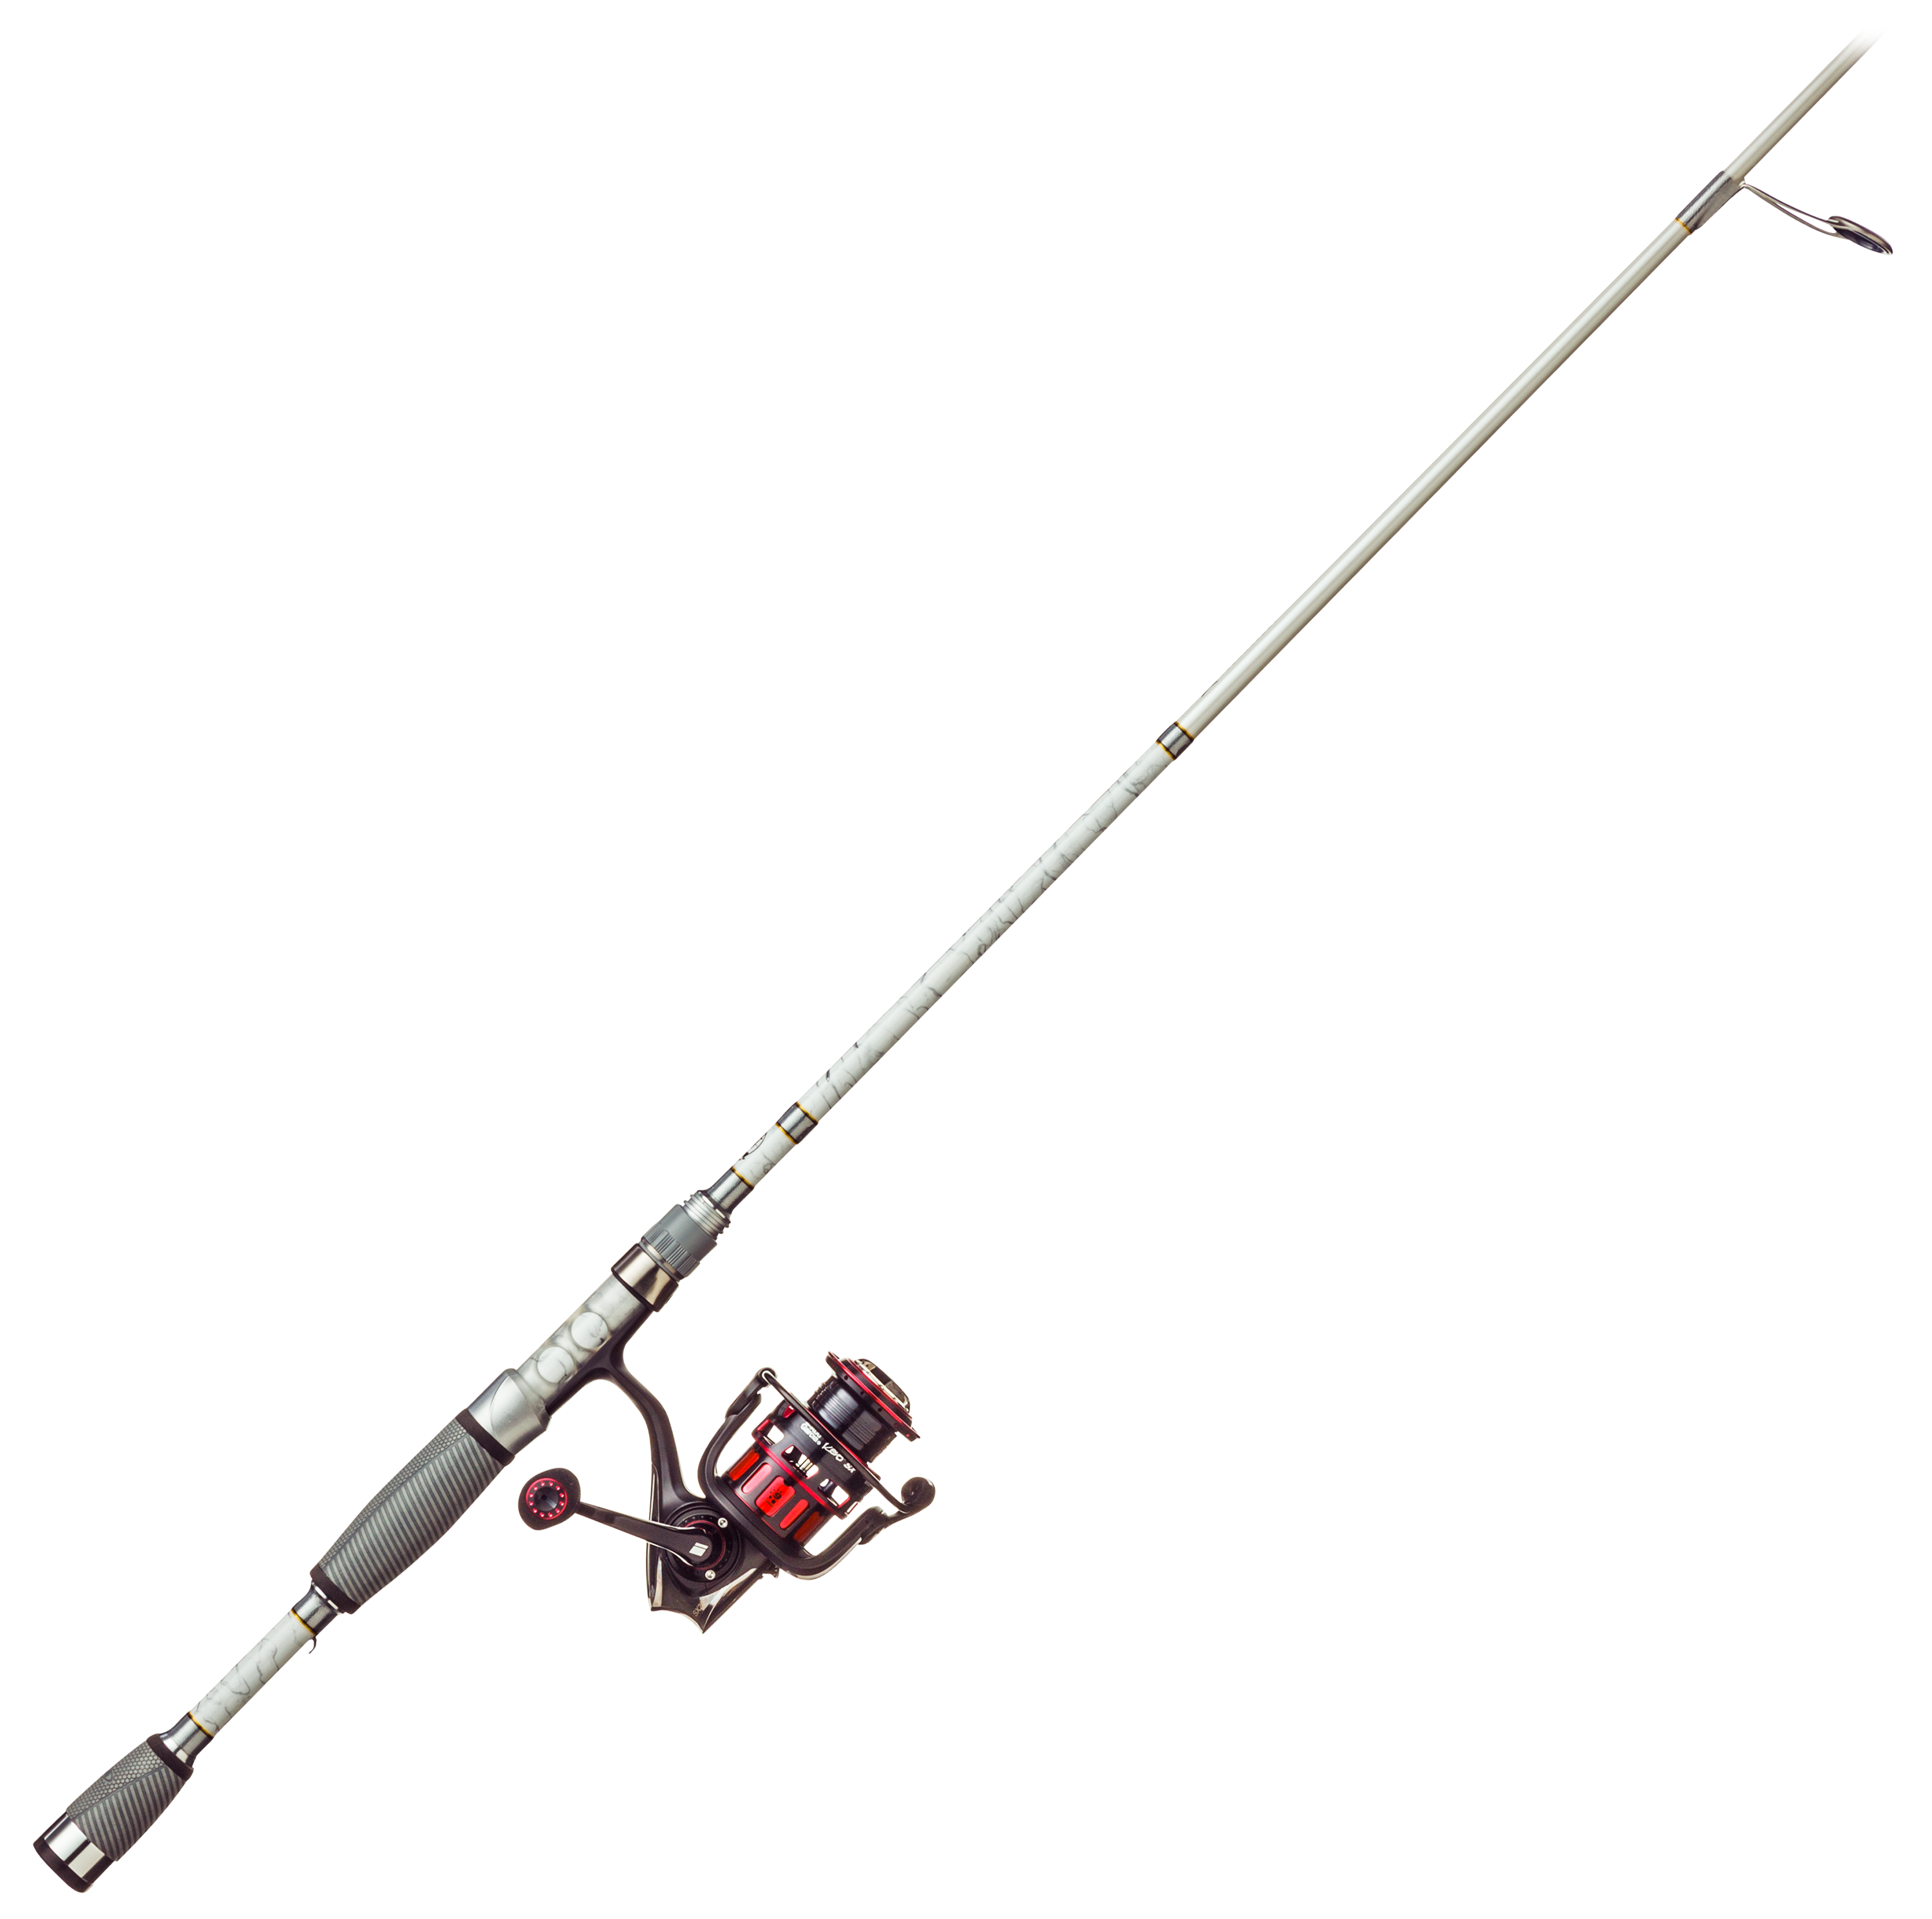 Abu Garcia Revo SX/Bass Pro Shops Johnny Morris CarbonLite Spinning Rod and Reel Combo - Model REVO2SX20/JCT70MSF